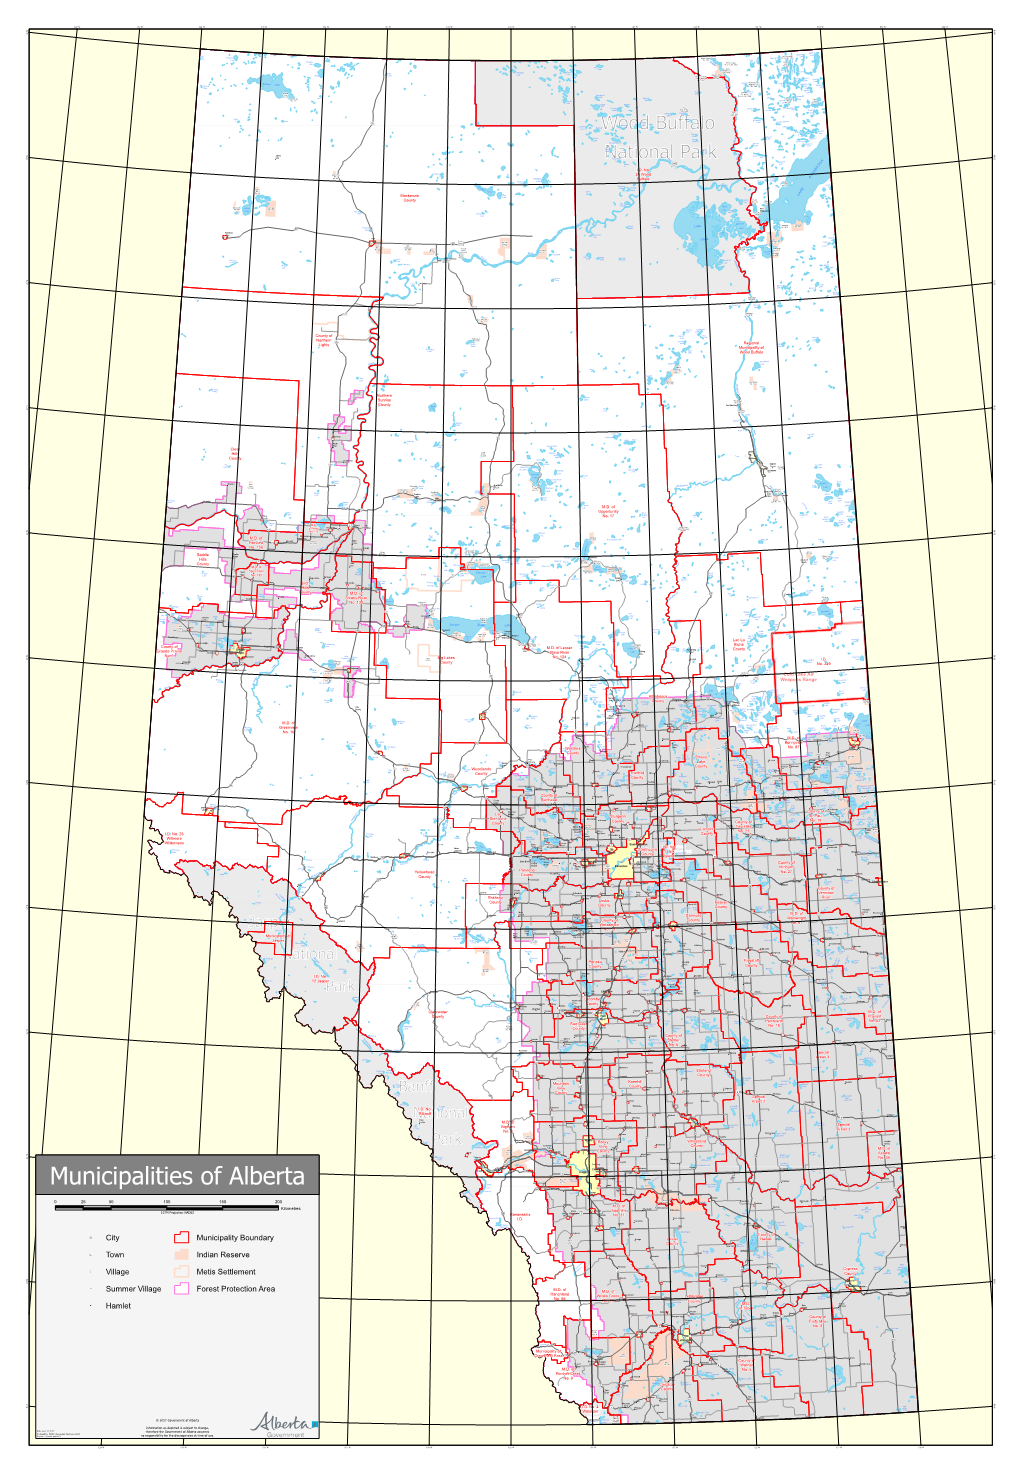 Municipalities of Alberta Map 2017